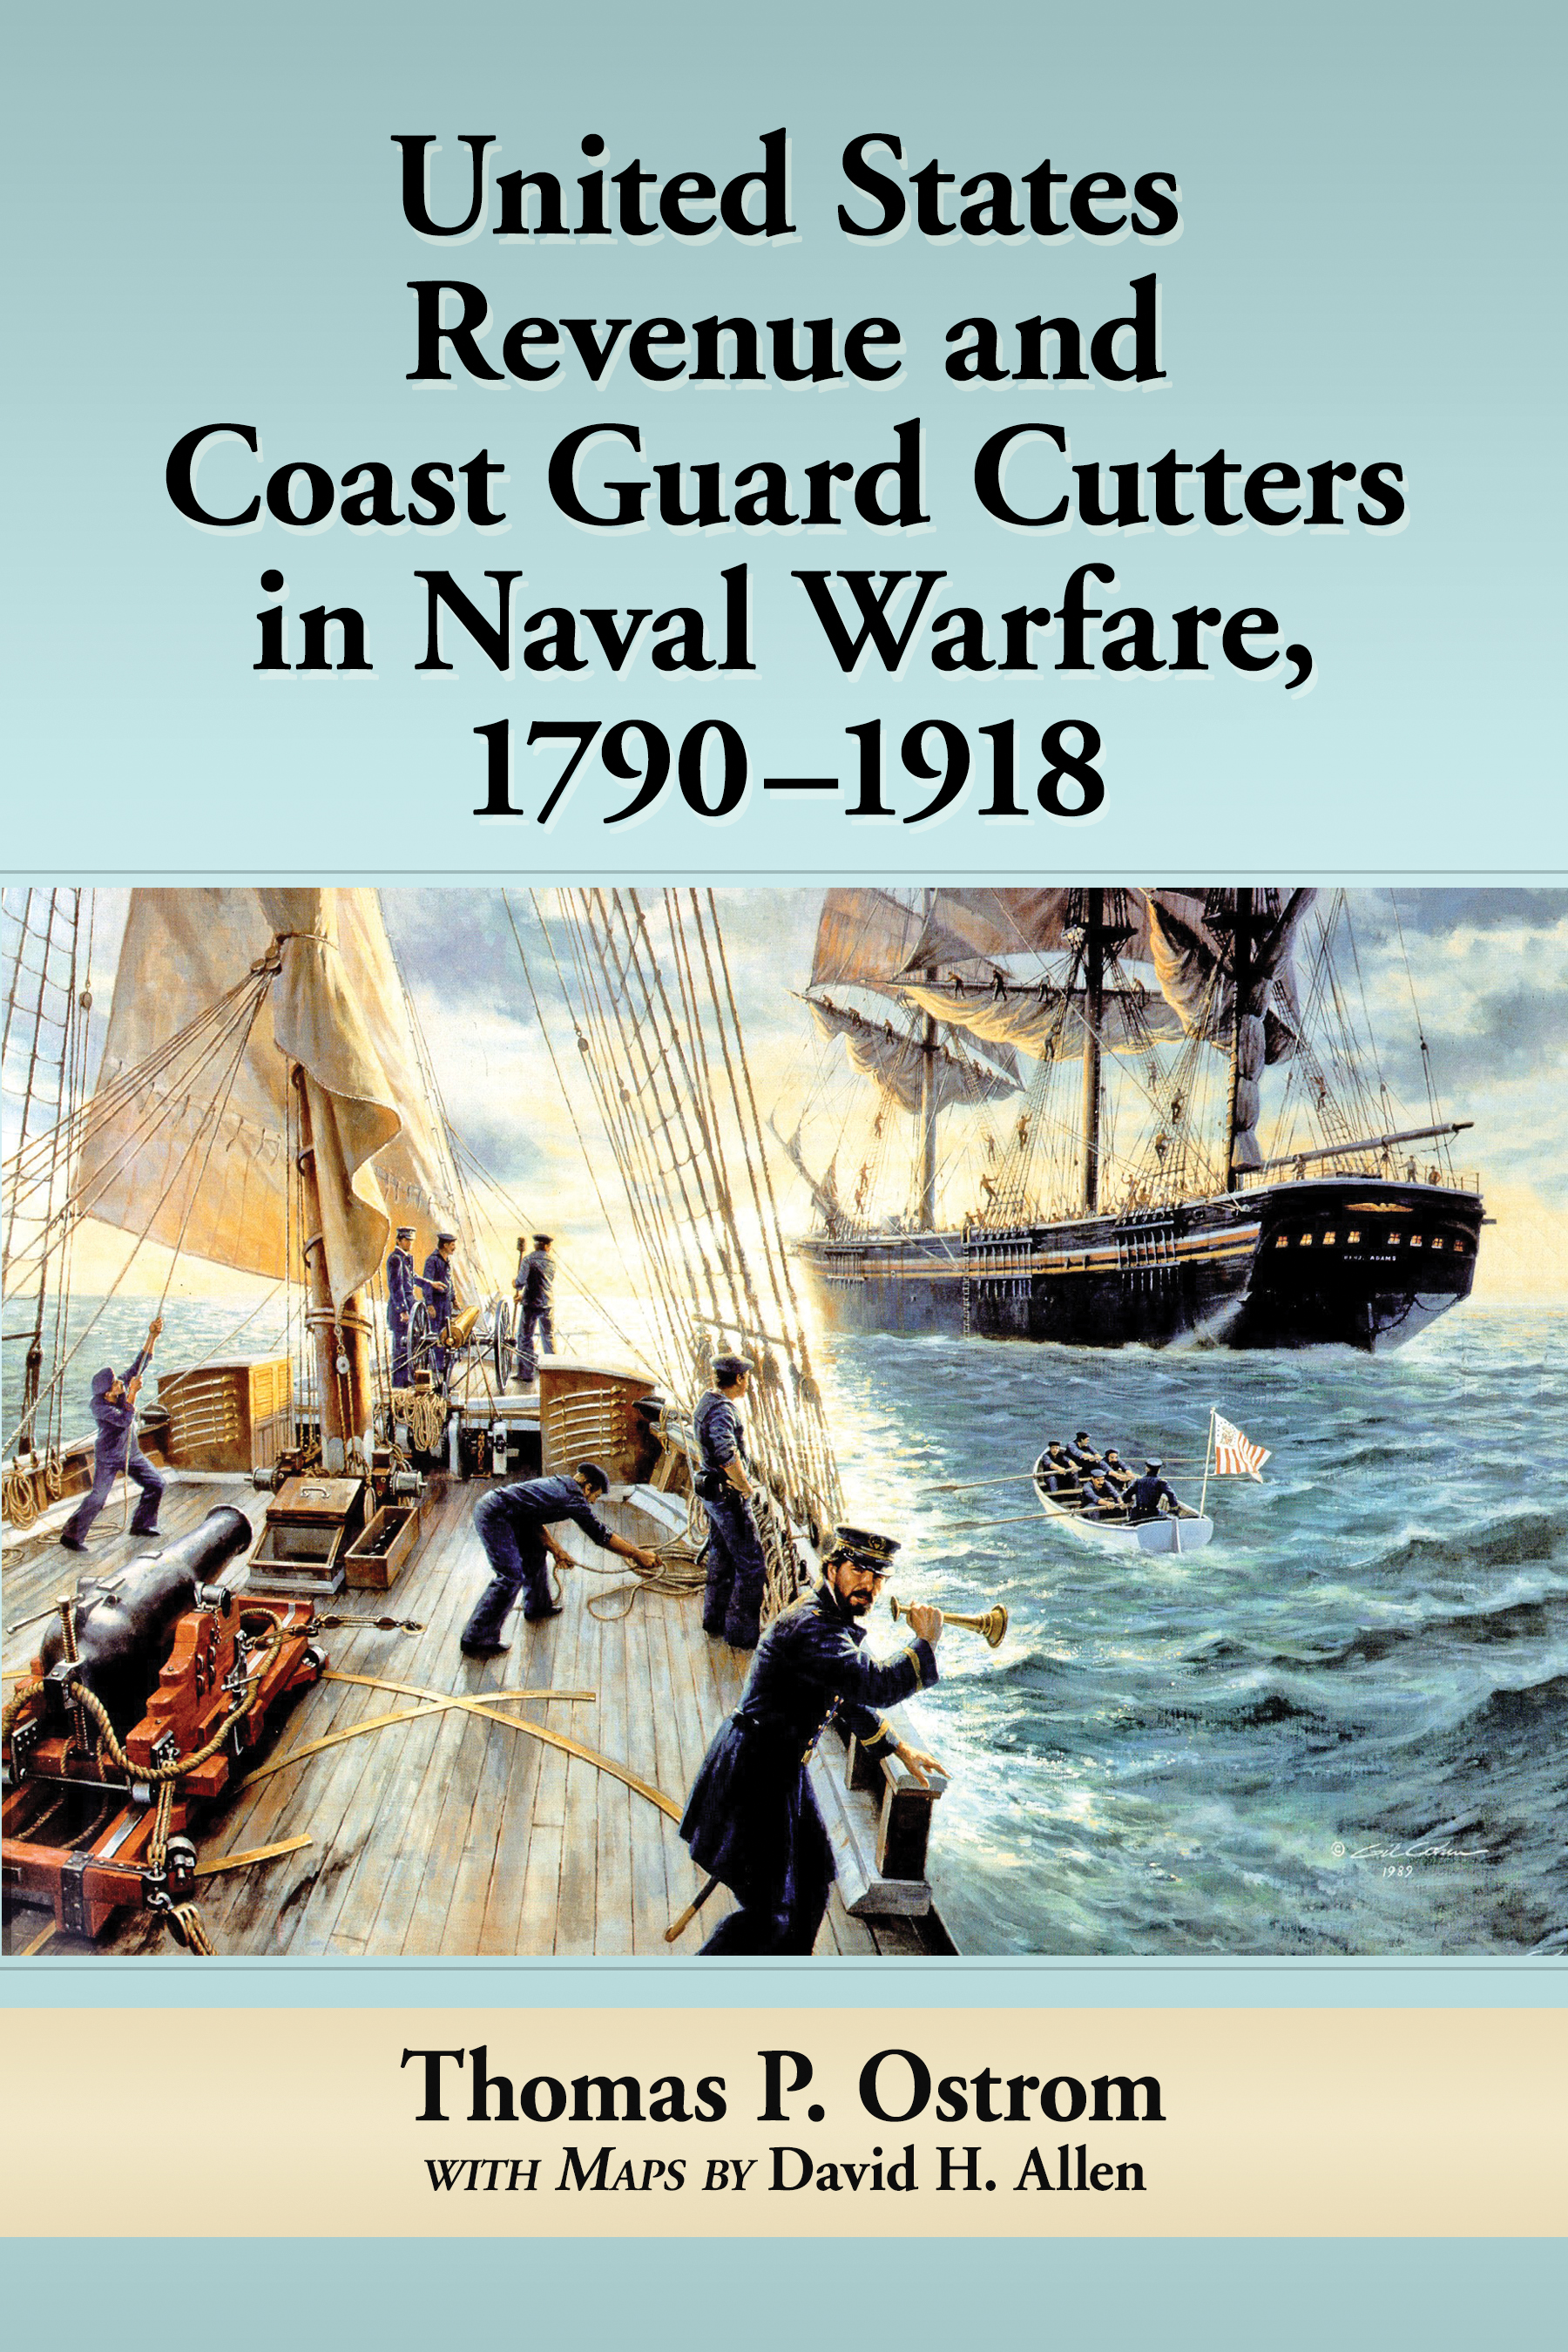 United States Revenue and Coast Guard Cutters in Naval Warfare 1790-1918 - image 1